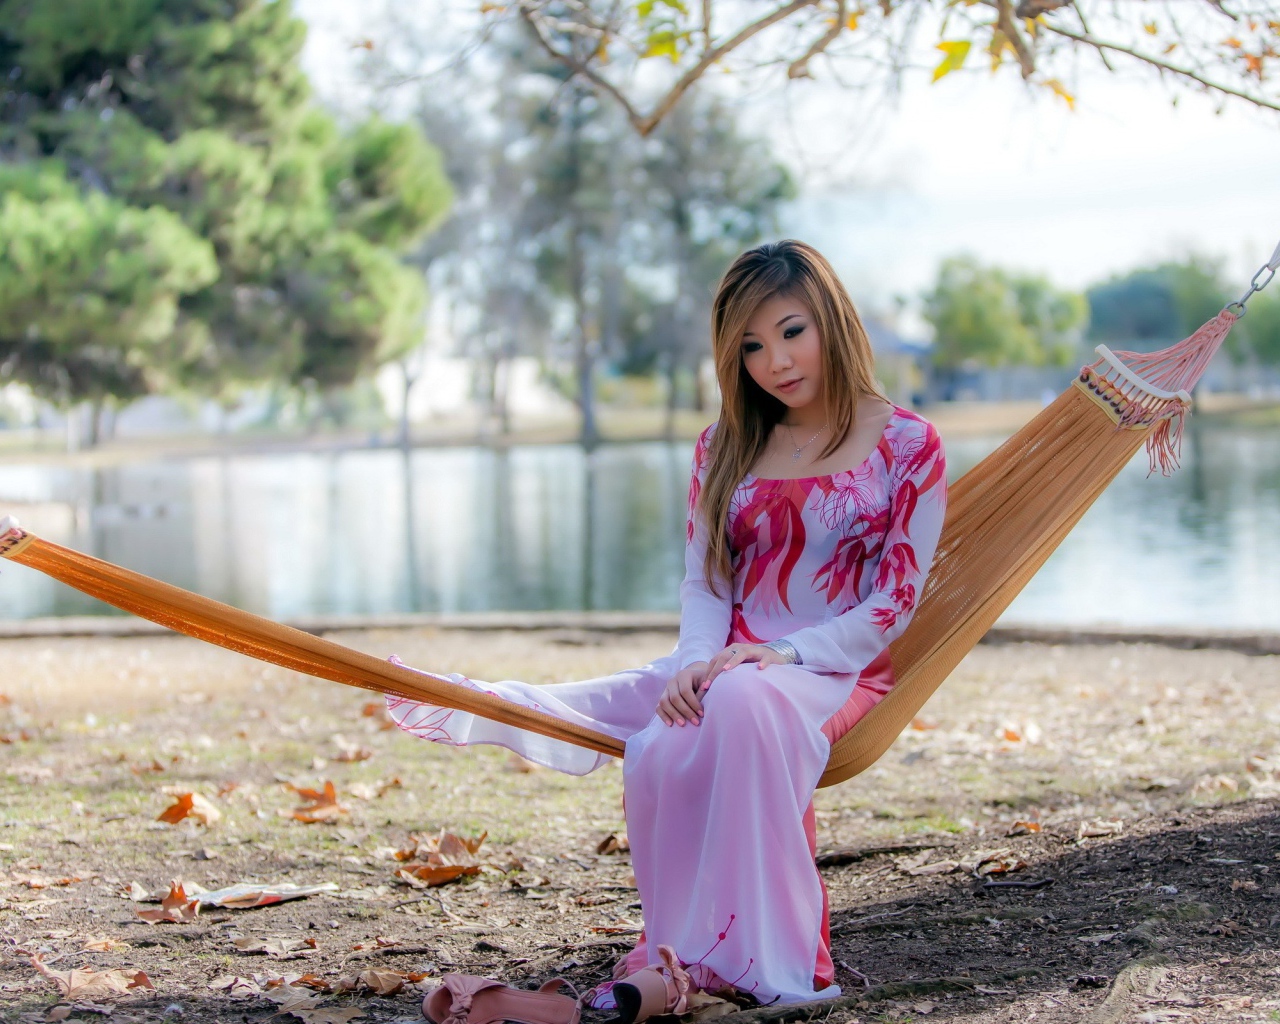 Girl on the hammock